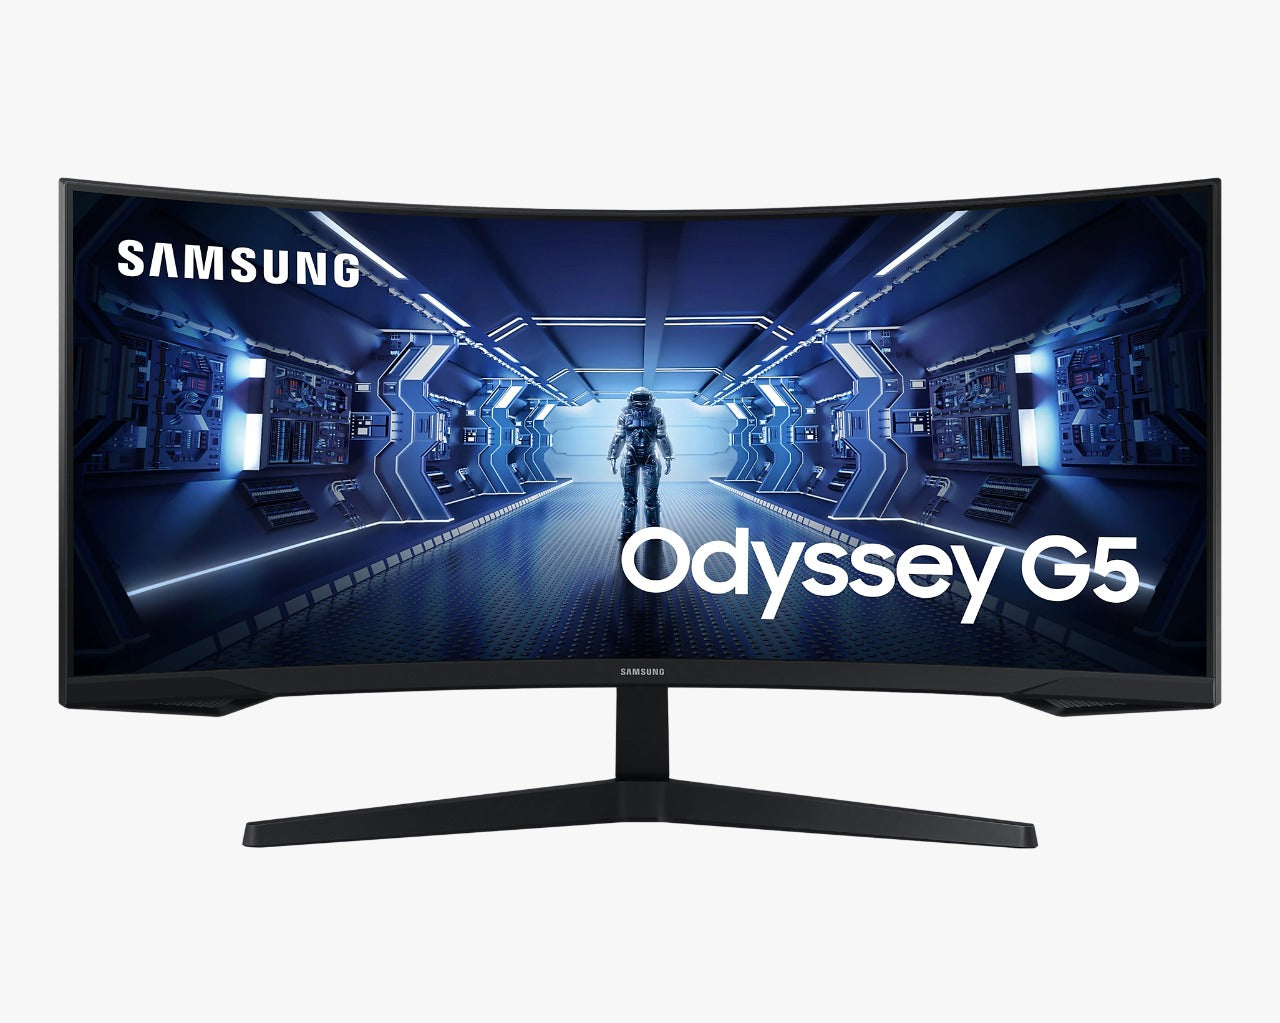 Samsung 86cm (34") Gaming Monitor with WQHD resolution